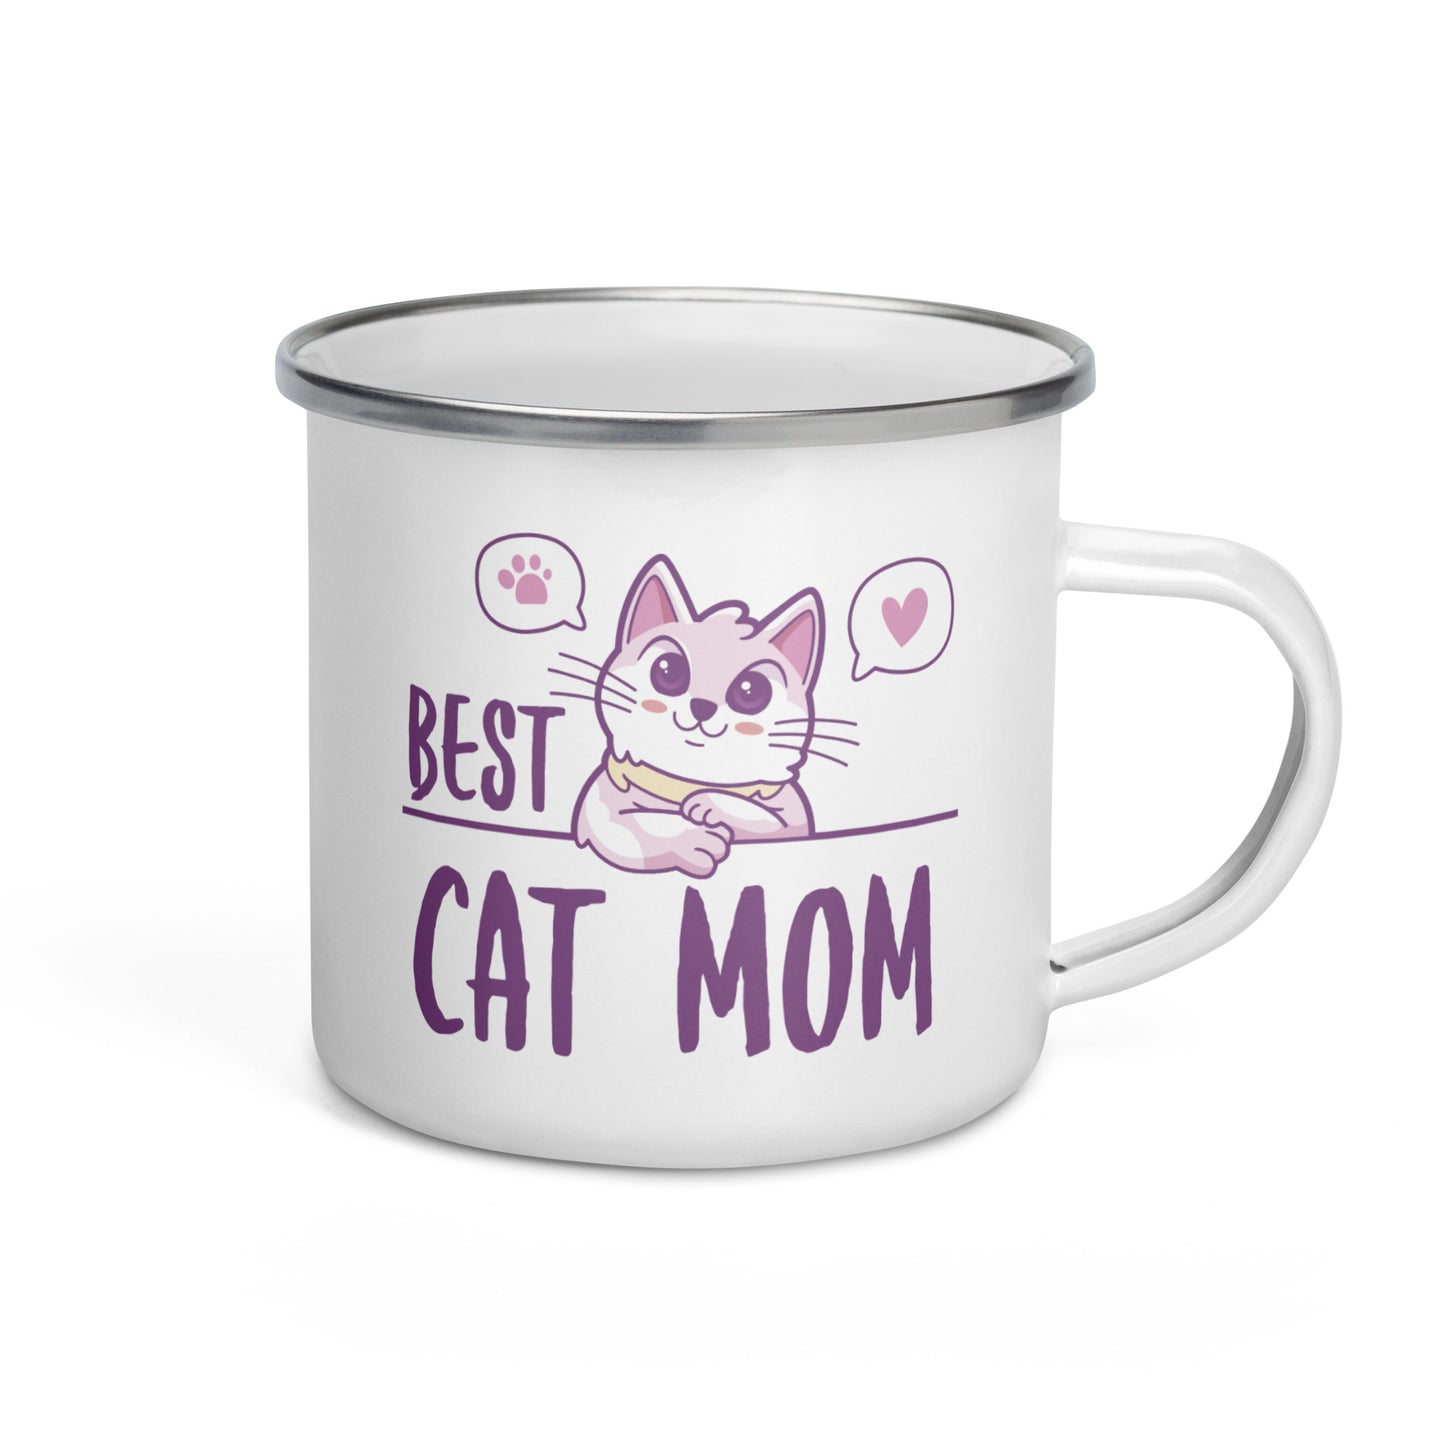 Best Cat Mom Enamel Mug